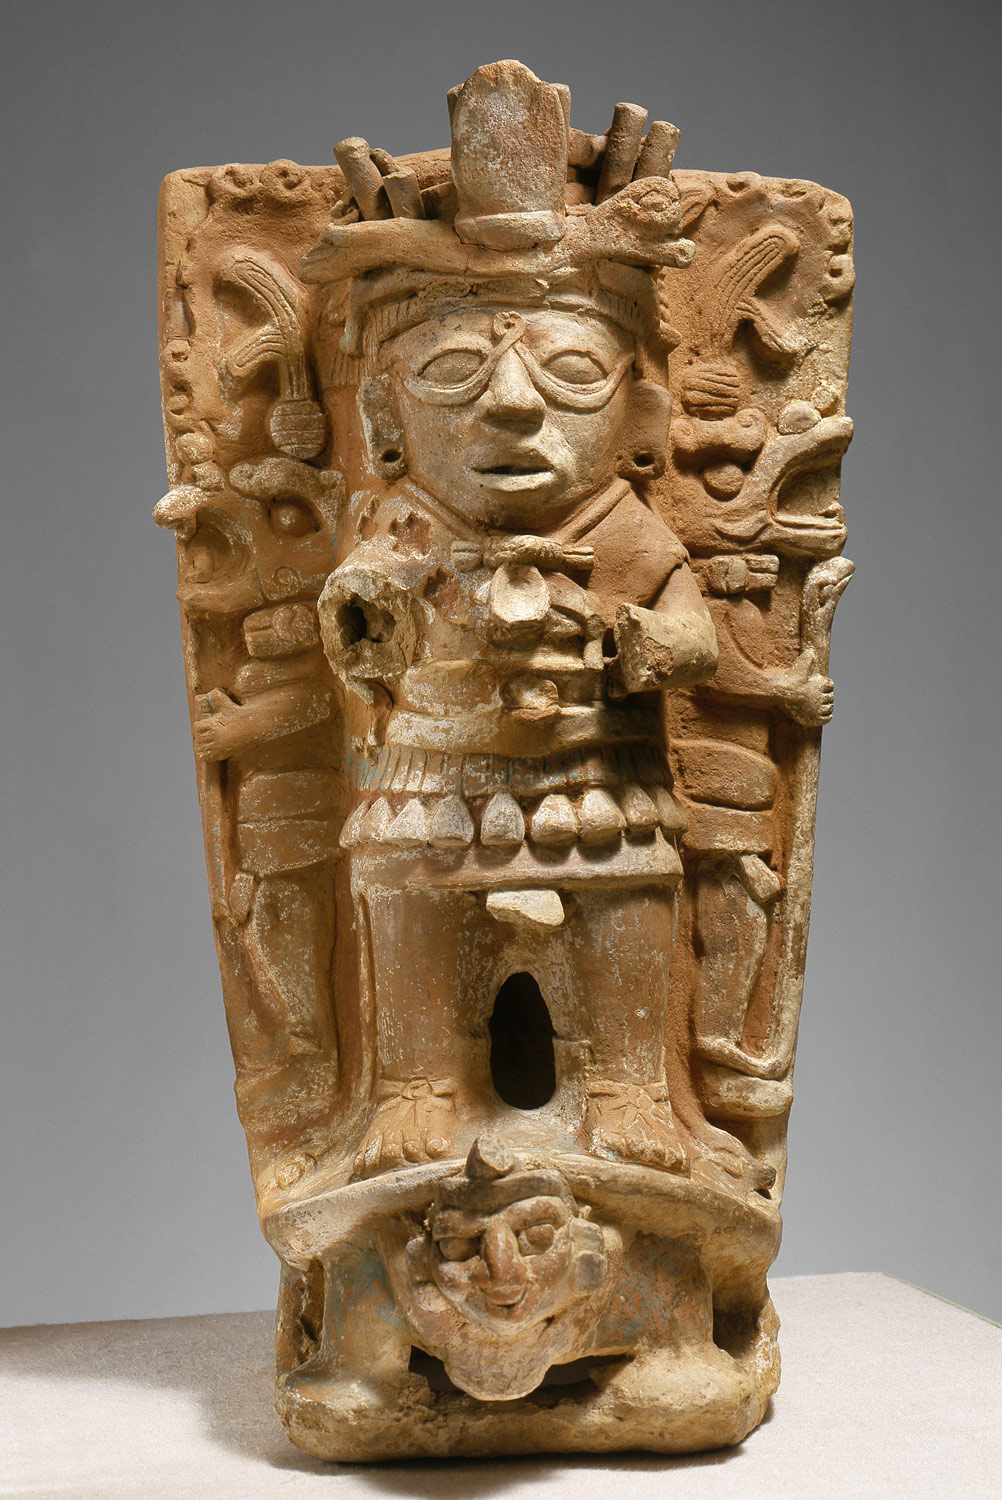 Mayan and aztec essay